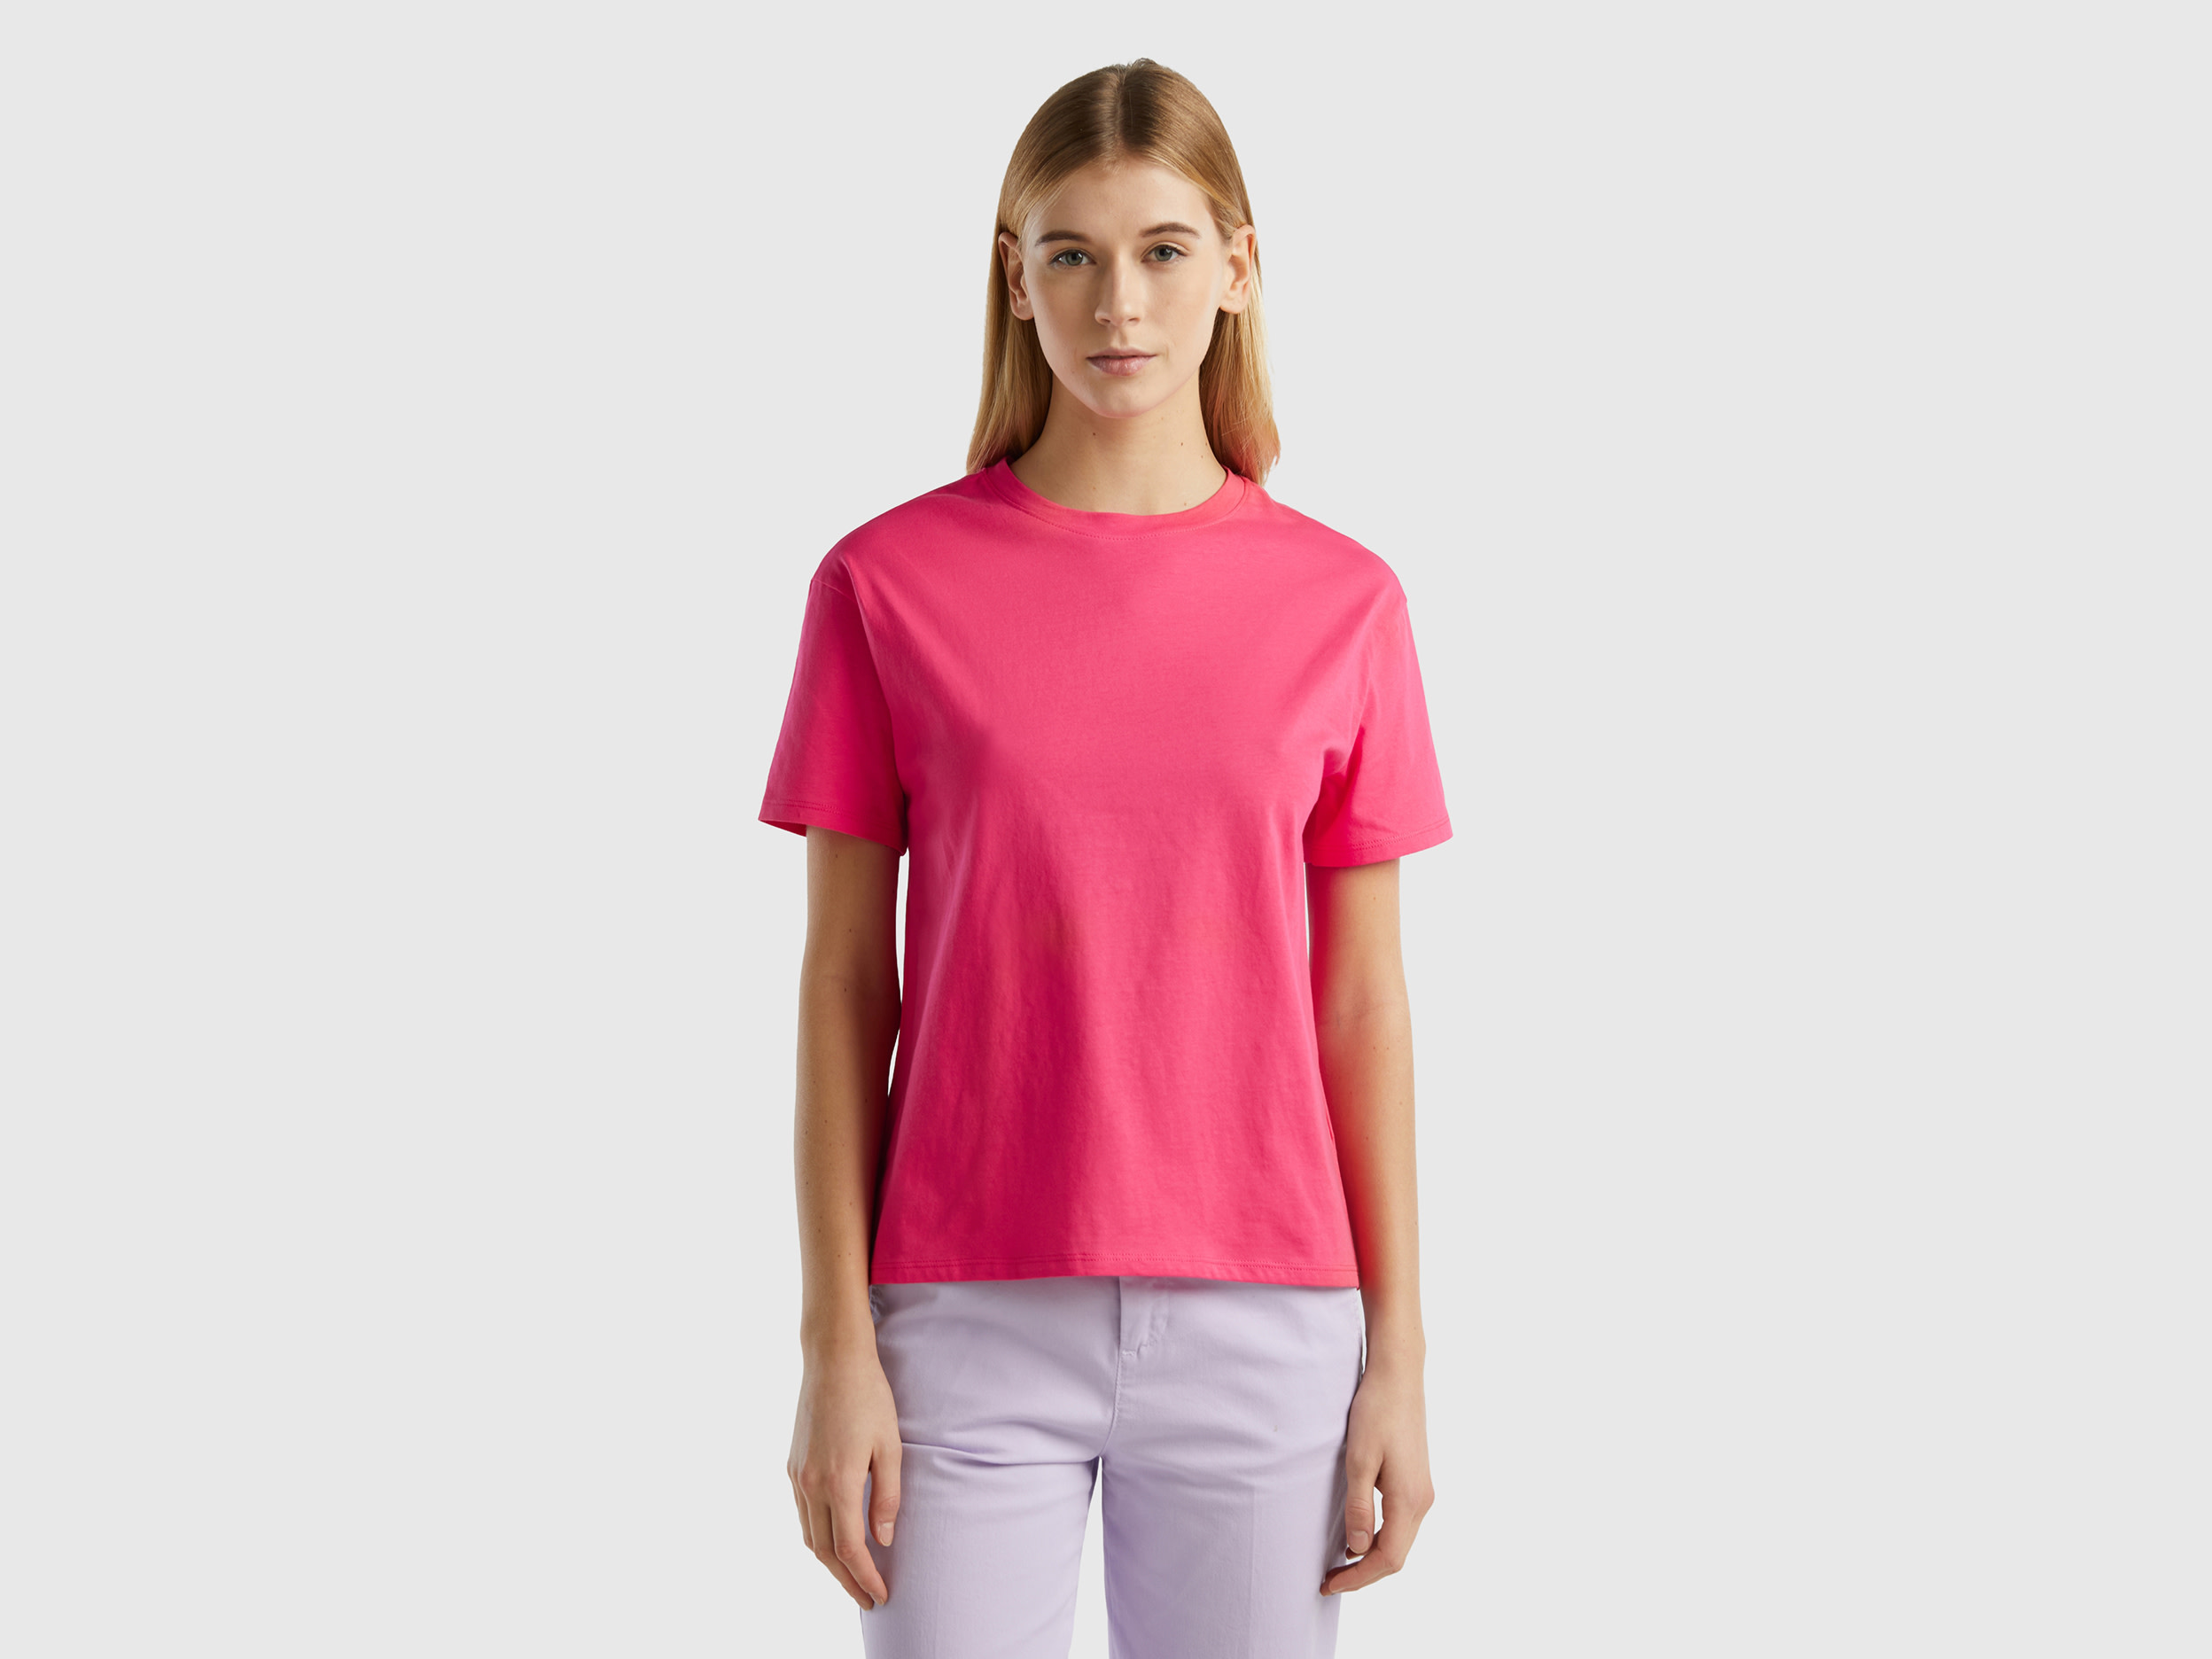 Benetton, Short Sleeve 100% Cotton T-shirt, size XXS, Fuchsia, Women